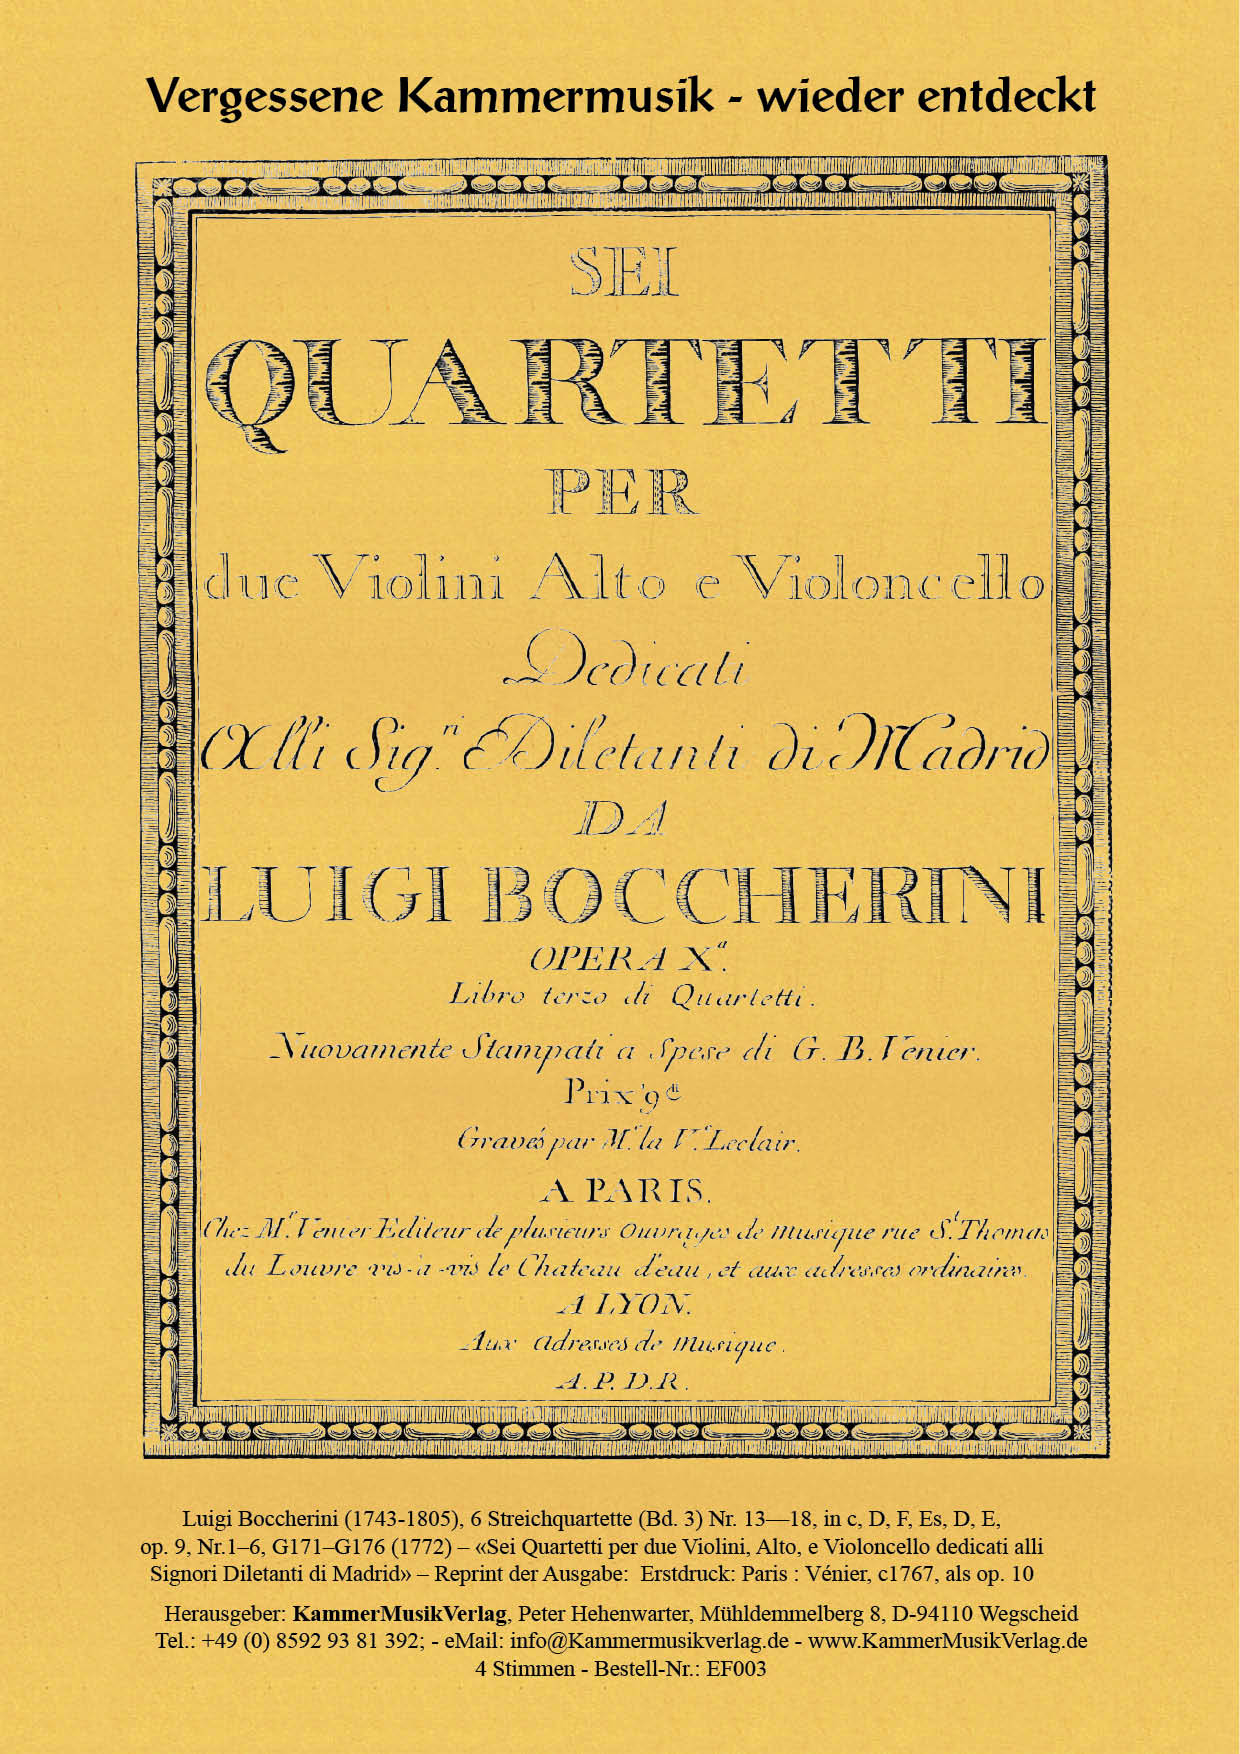 Boccherini: String Quartets Nos. 13-18, G 171-176, Op. 9